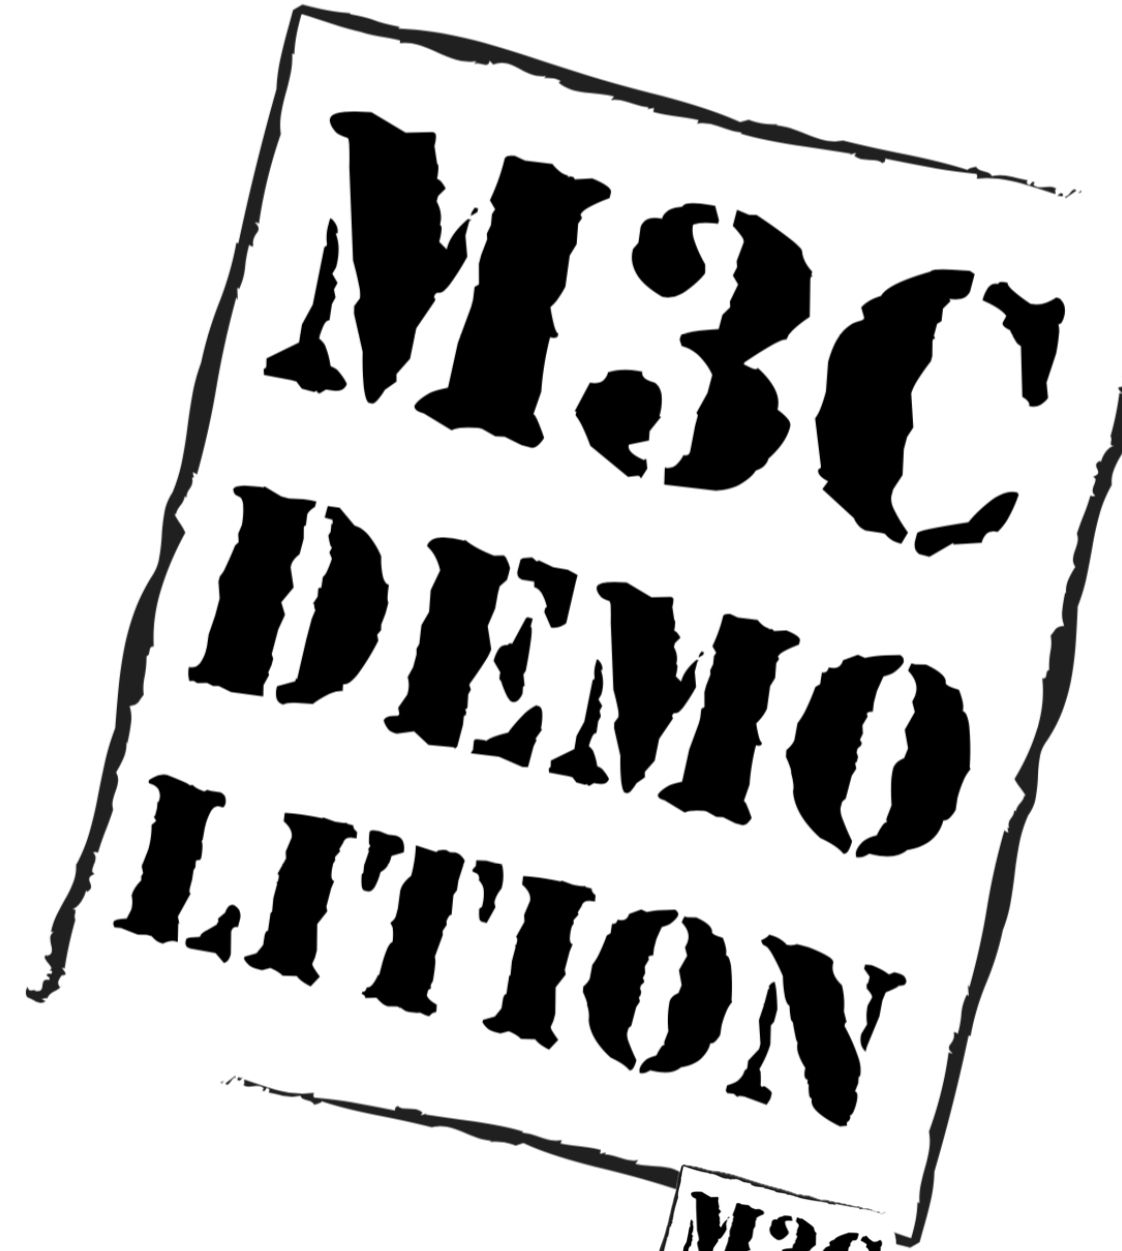 M3C Demolition Ltd's logo